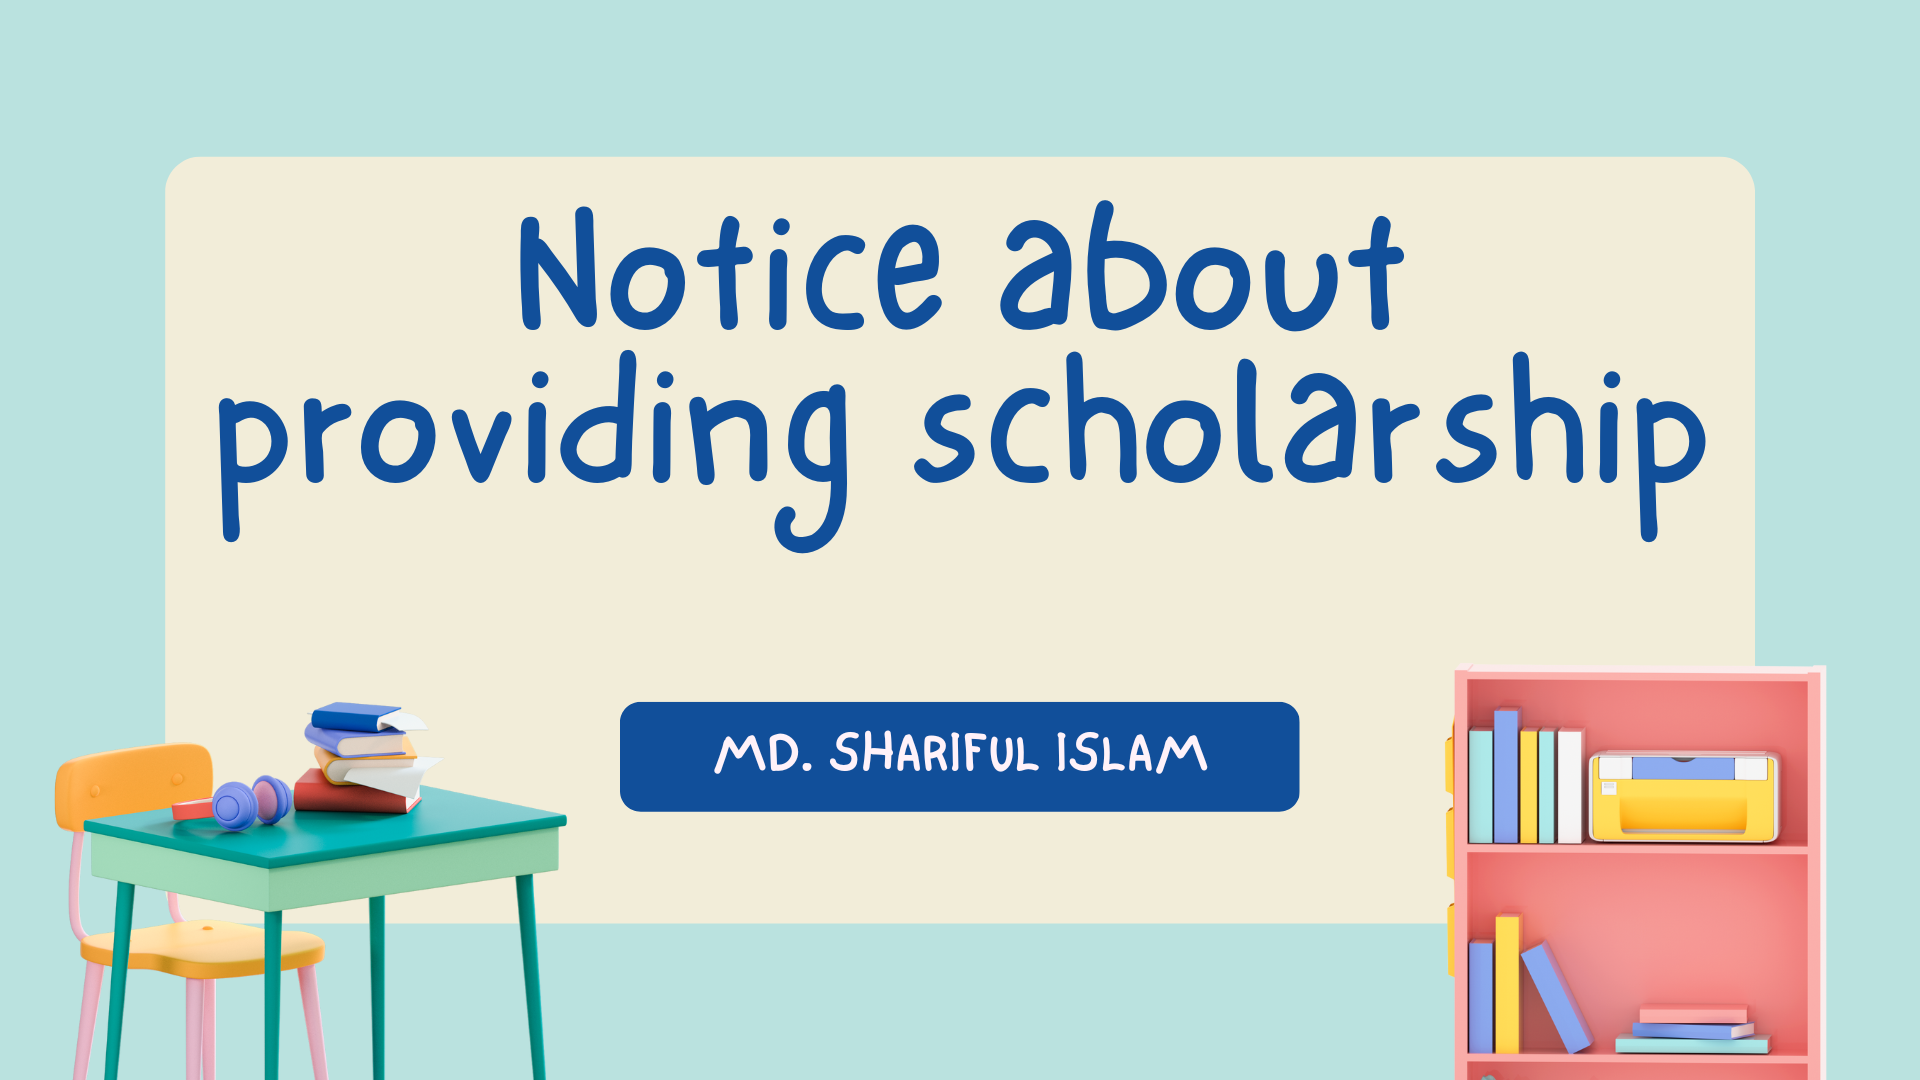 Notice about providing scholarship